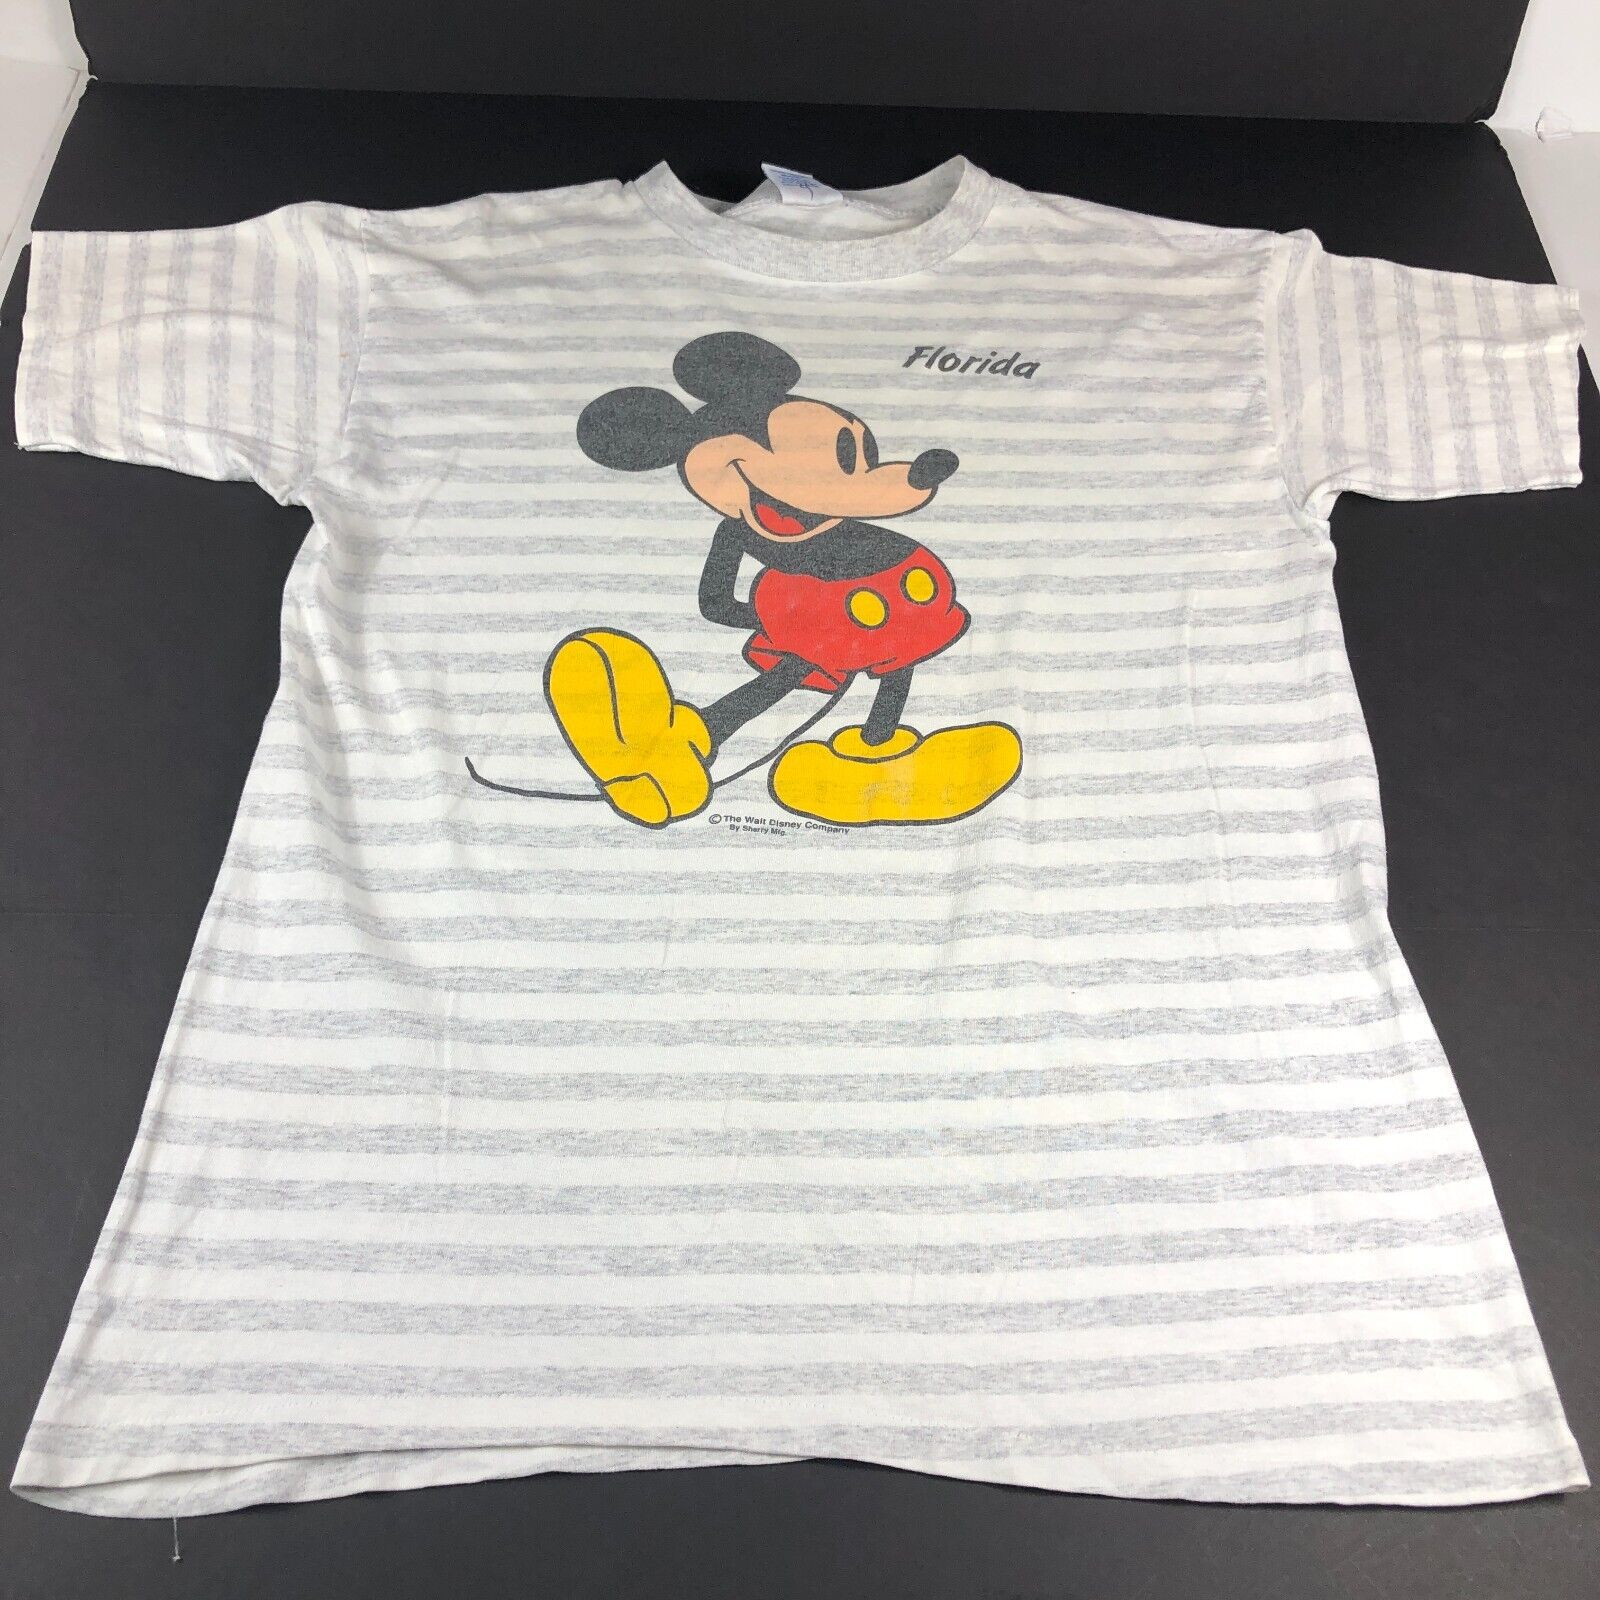 Vintage 80s Disney Mickey Mouse Shirt Men's Large White & Grey Striped Florida